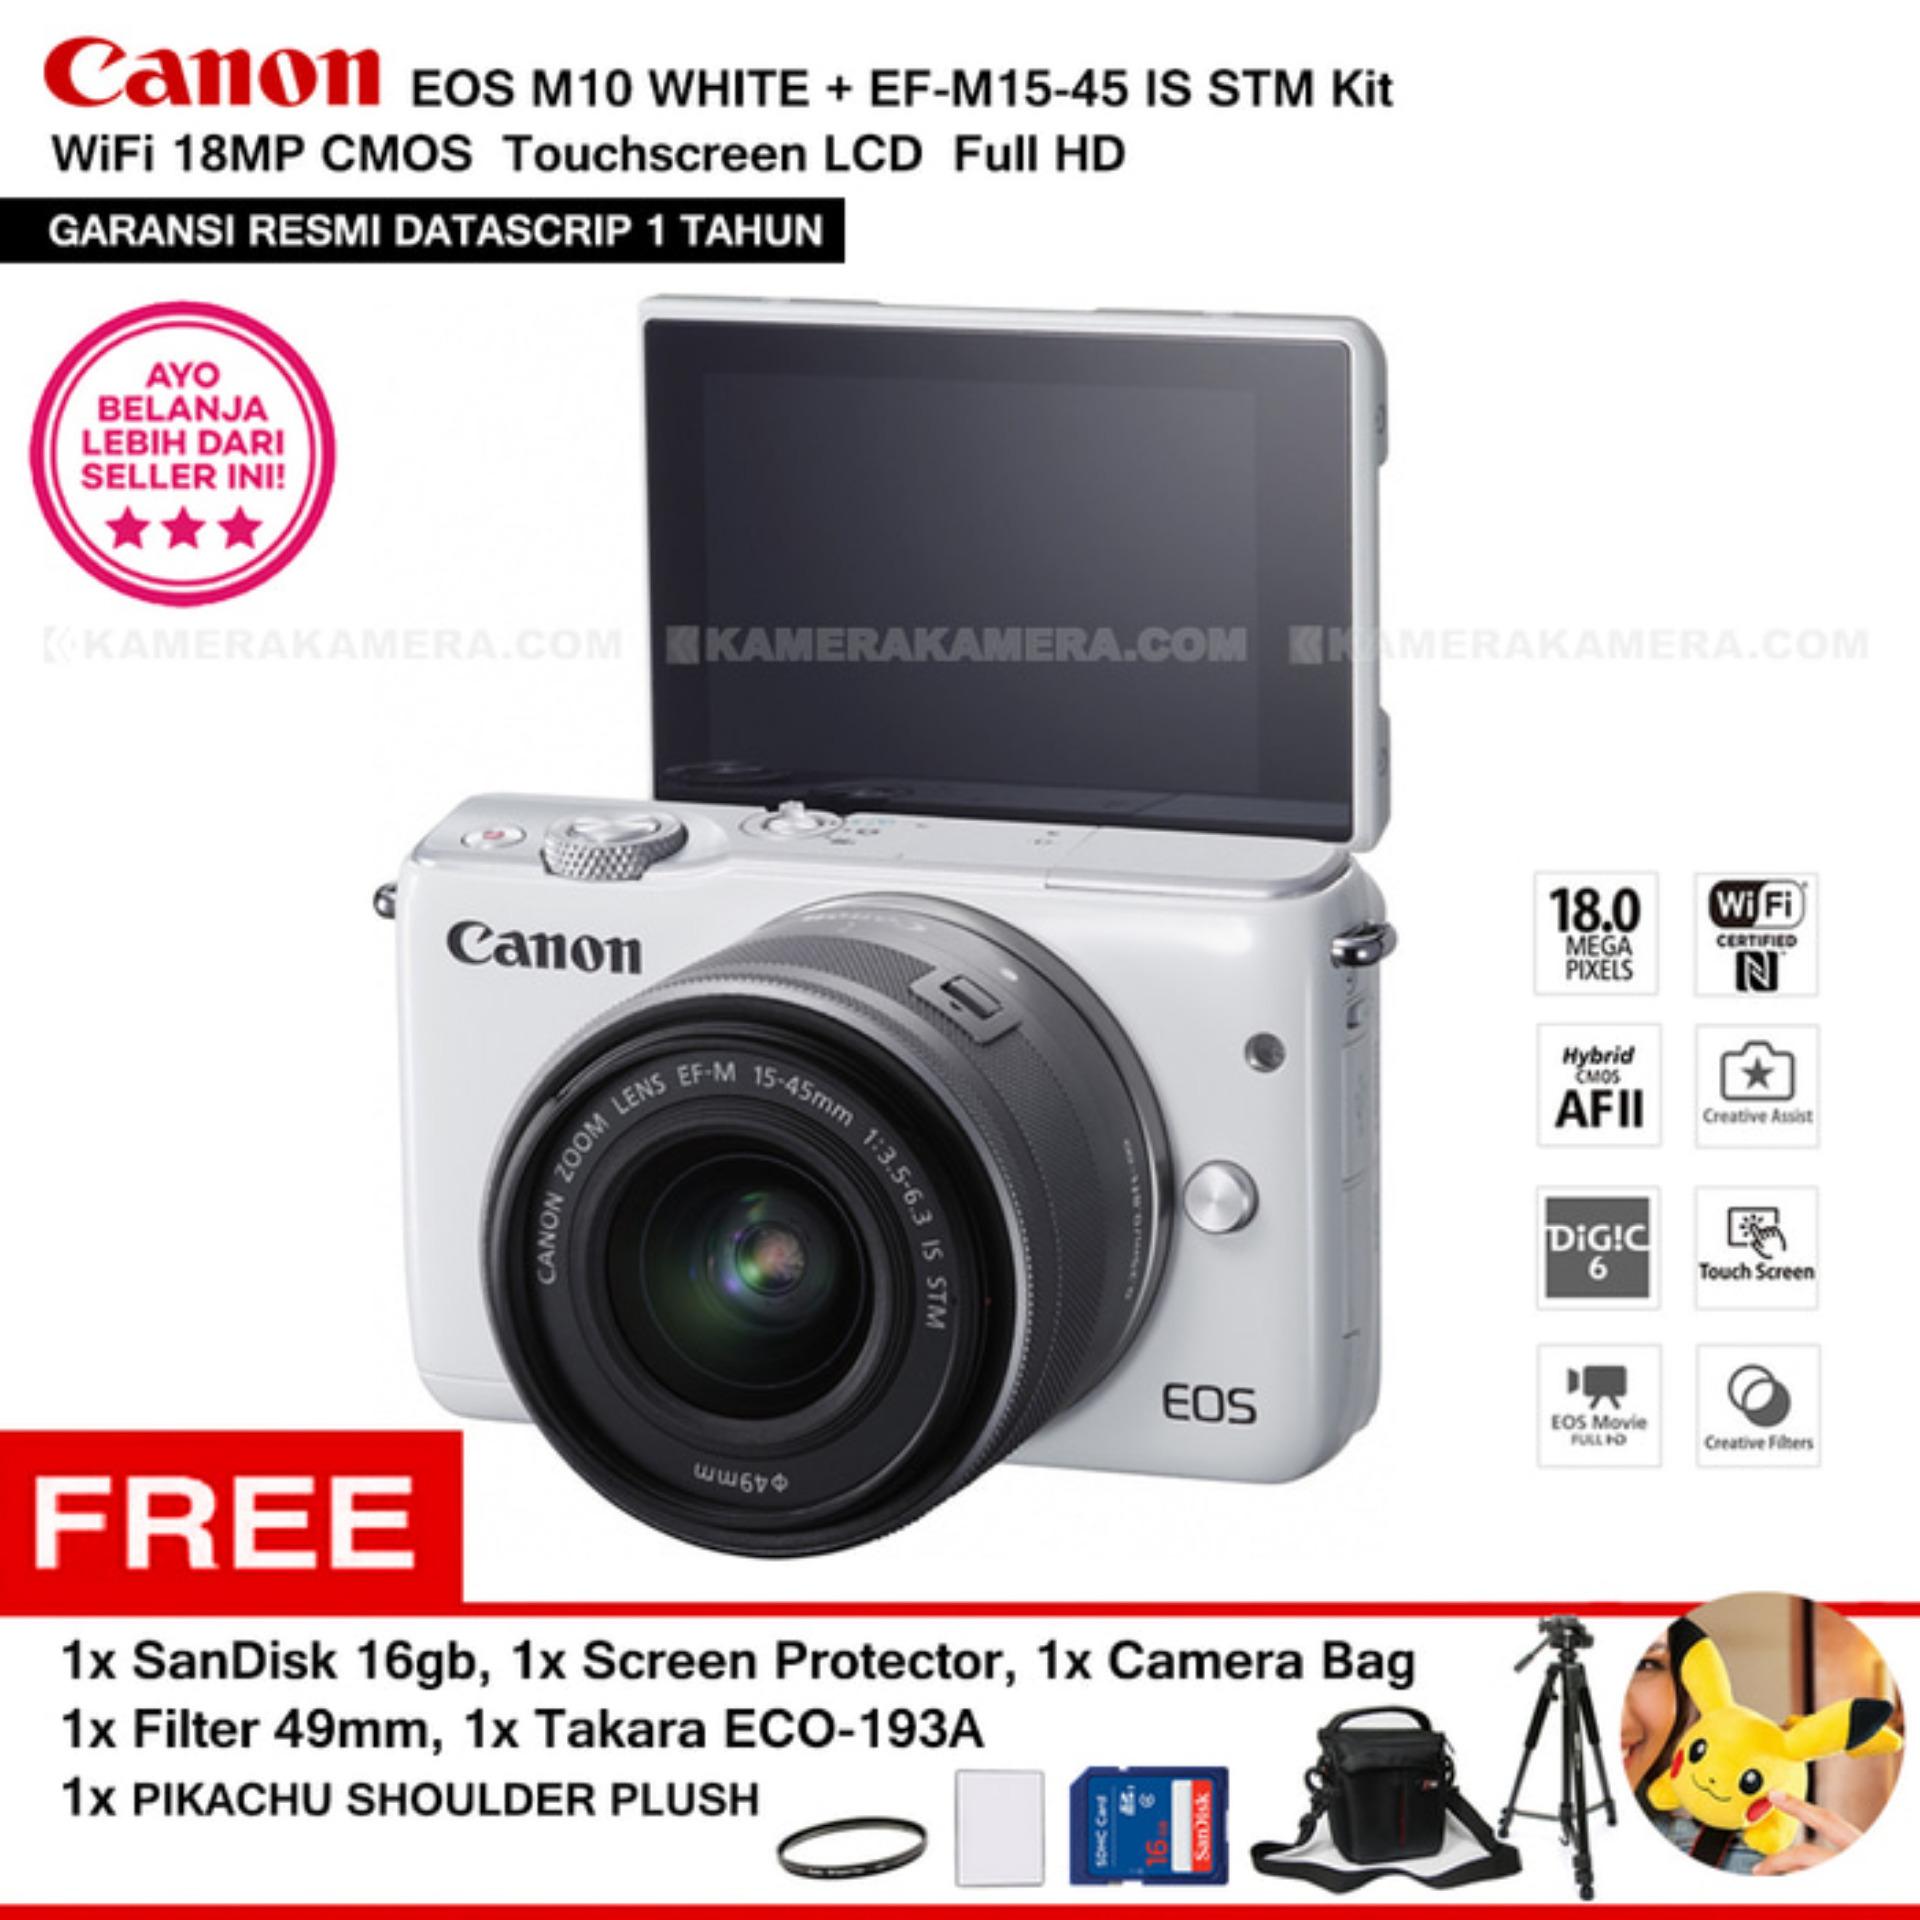 CANON EOS M10 WHITE + EF-M15-45 IS STM Kit Wifi 18MP CMOS Touchscreen Lcd Full Hd (Datascrip) Free Pokemon Pikachu Shoulder Plush + Screen Guard + SanDisk 16gb + Filter 49mm + Camera Bag + Takara ECO-193A